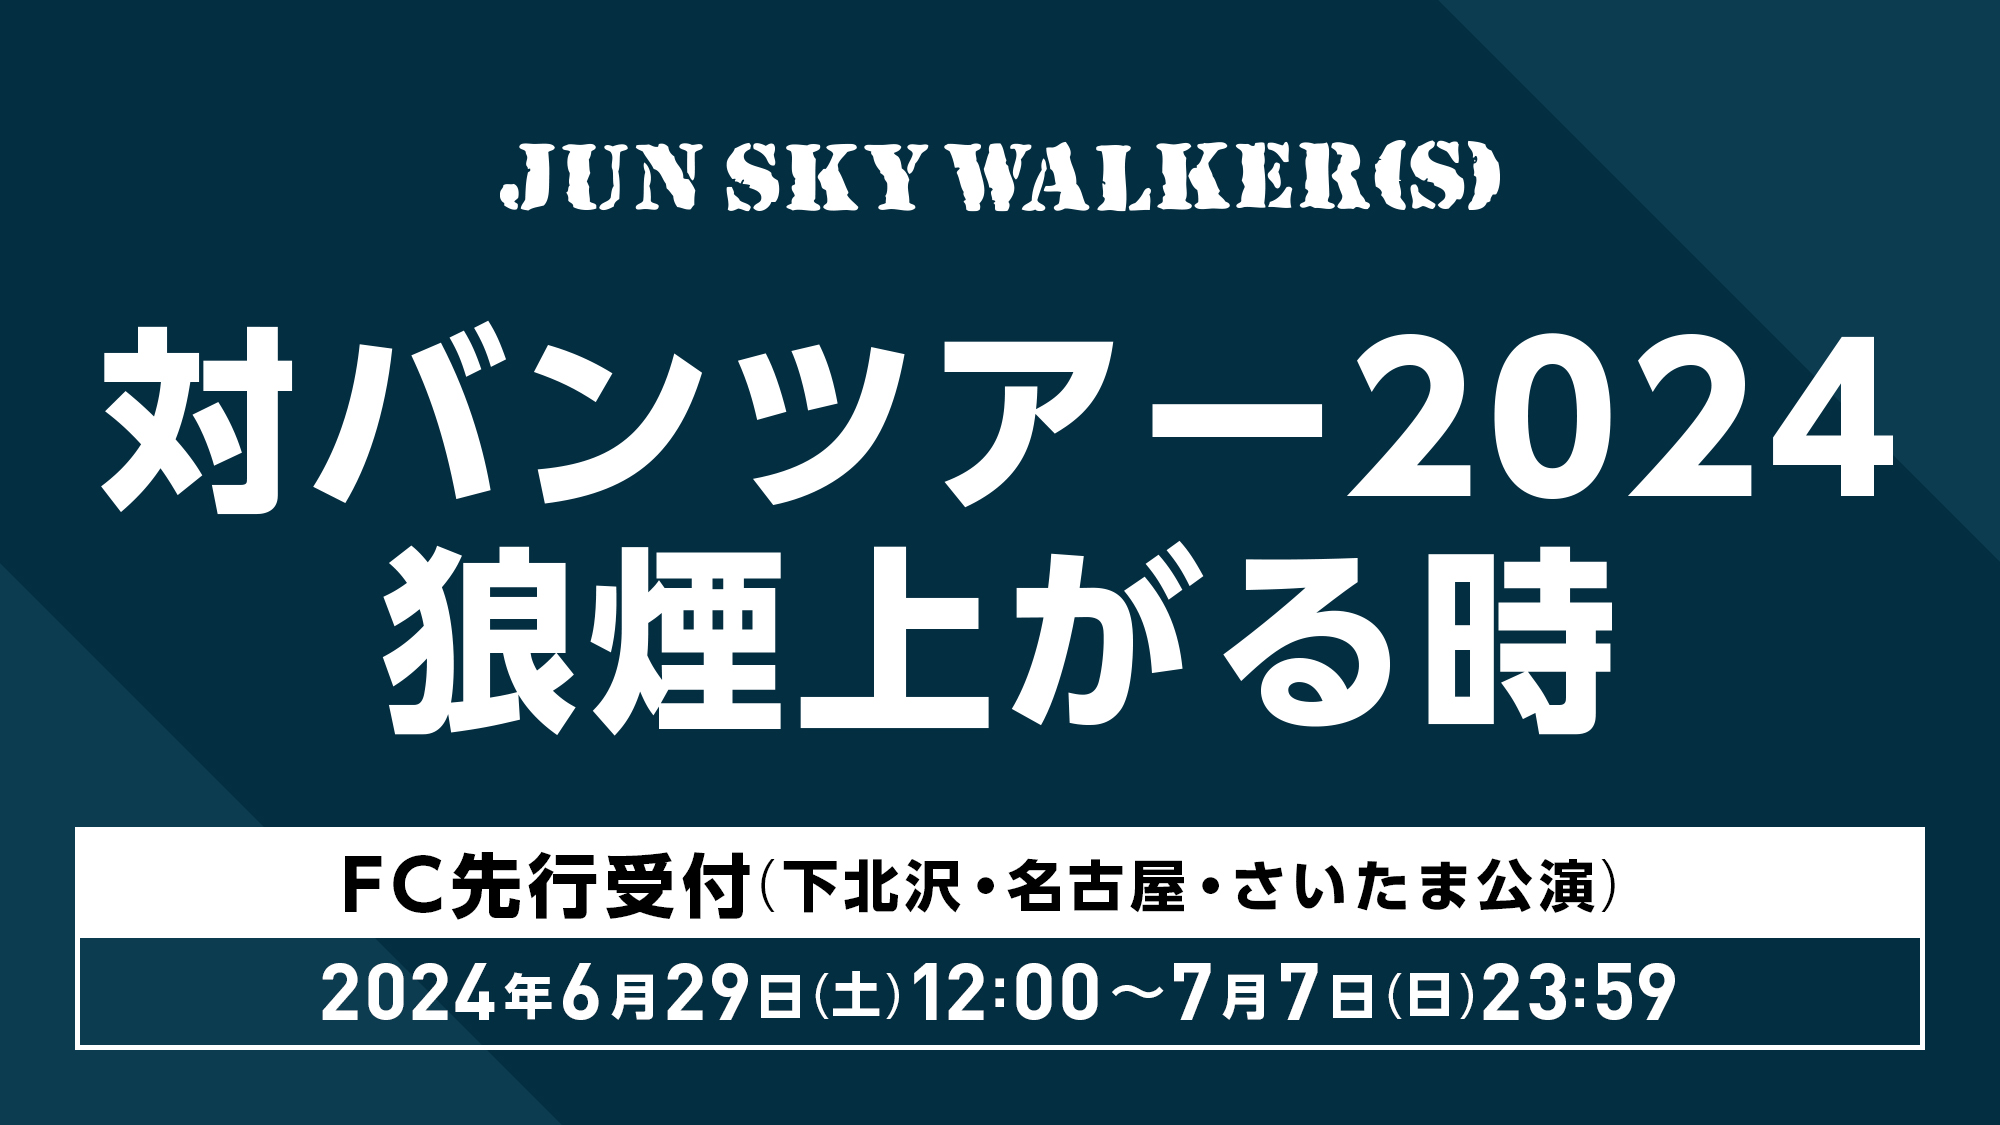 JUN SKY WALKER(S) 対バンツアー2024 「狼煙上がる時」